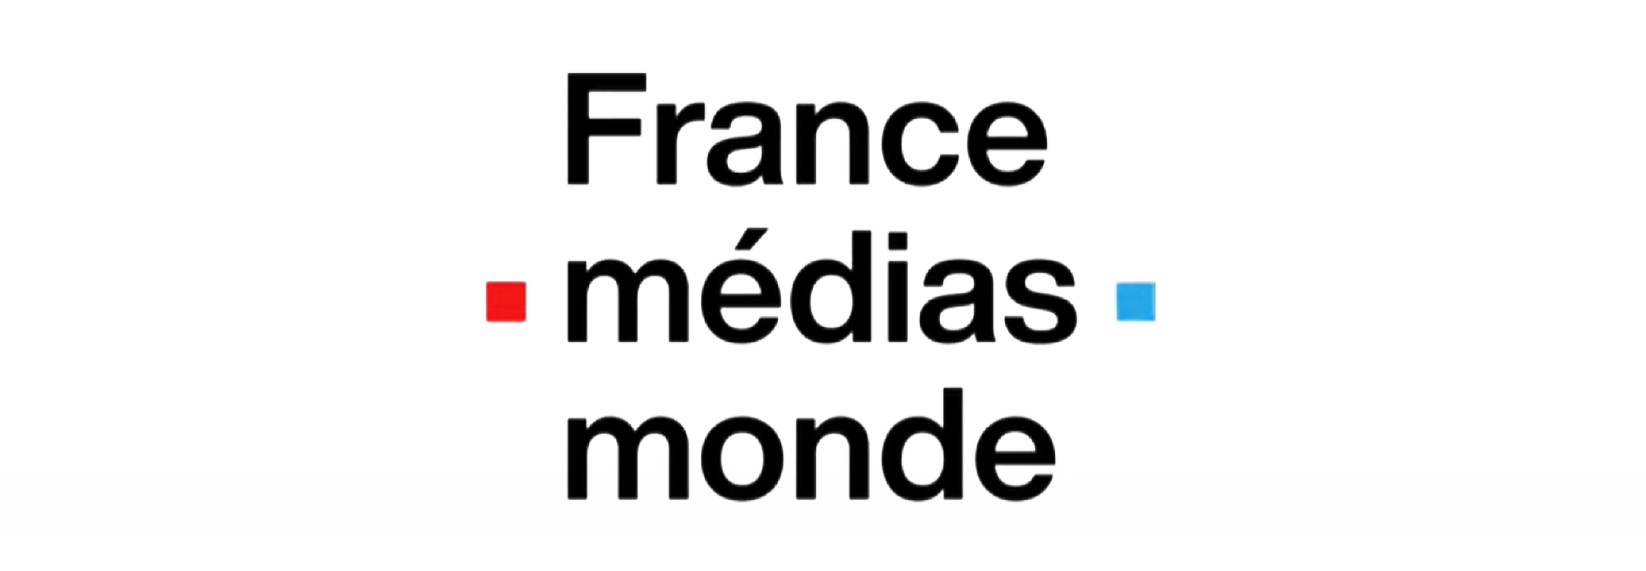 France média Monde